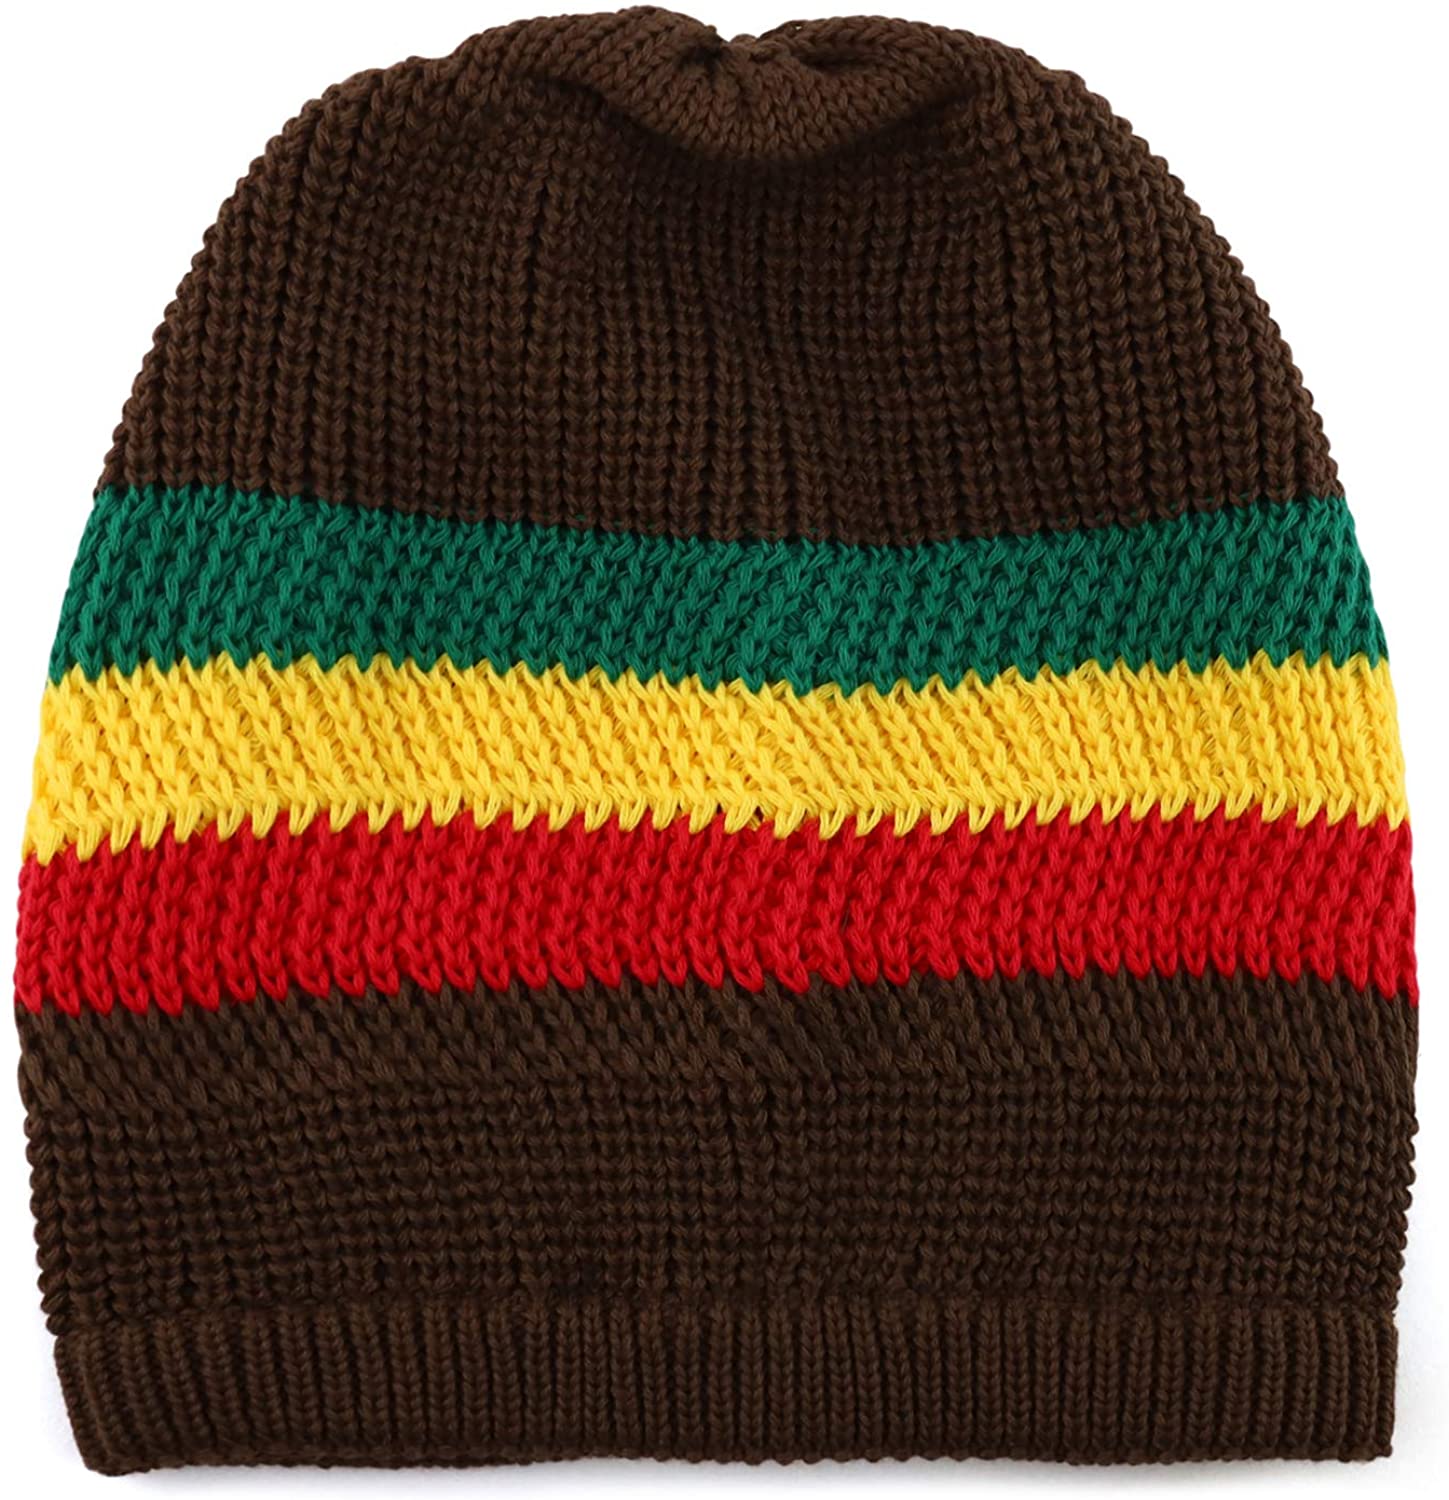 Armycrew Long Slouchy Striped Jamaica Rasta Winter Knit Cotton Dreadlock Beanie Hat - Brown Rasta